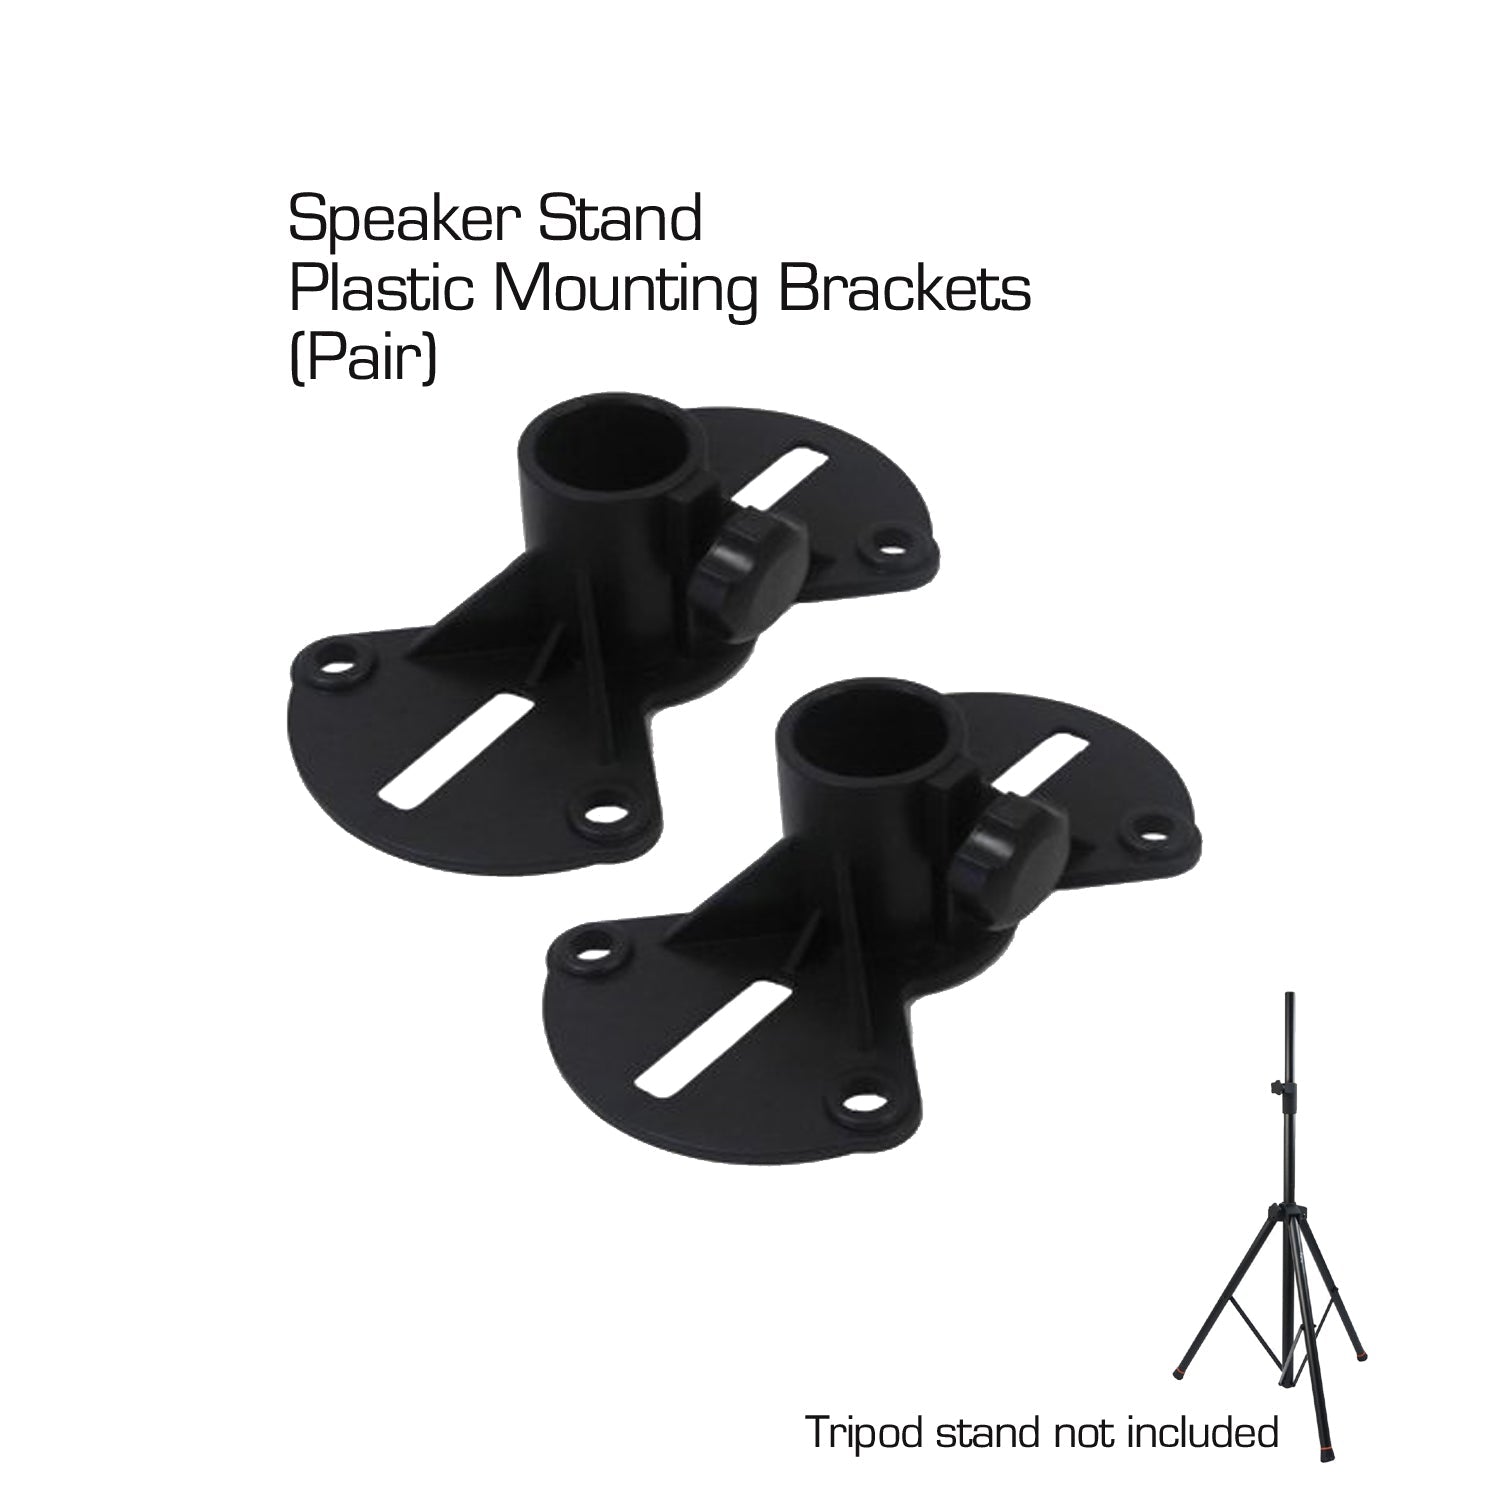 Plastic Speaker Mounts (2x) for Speaker Tripod Stand or Wall Mount - Karaoke Home Entertainment